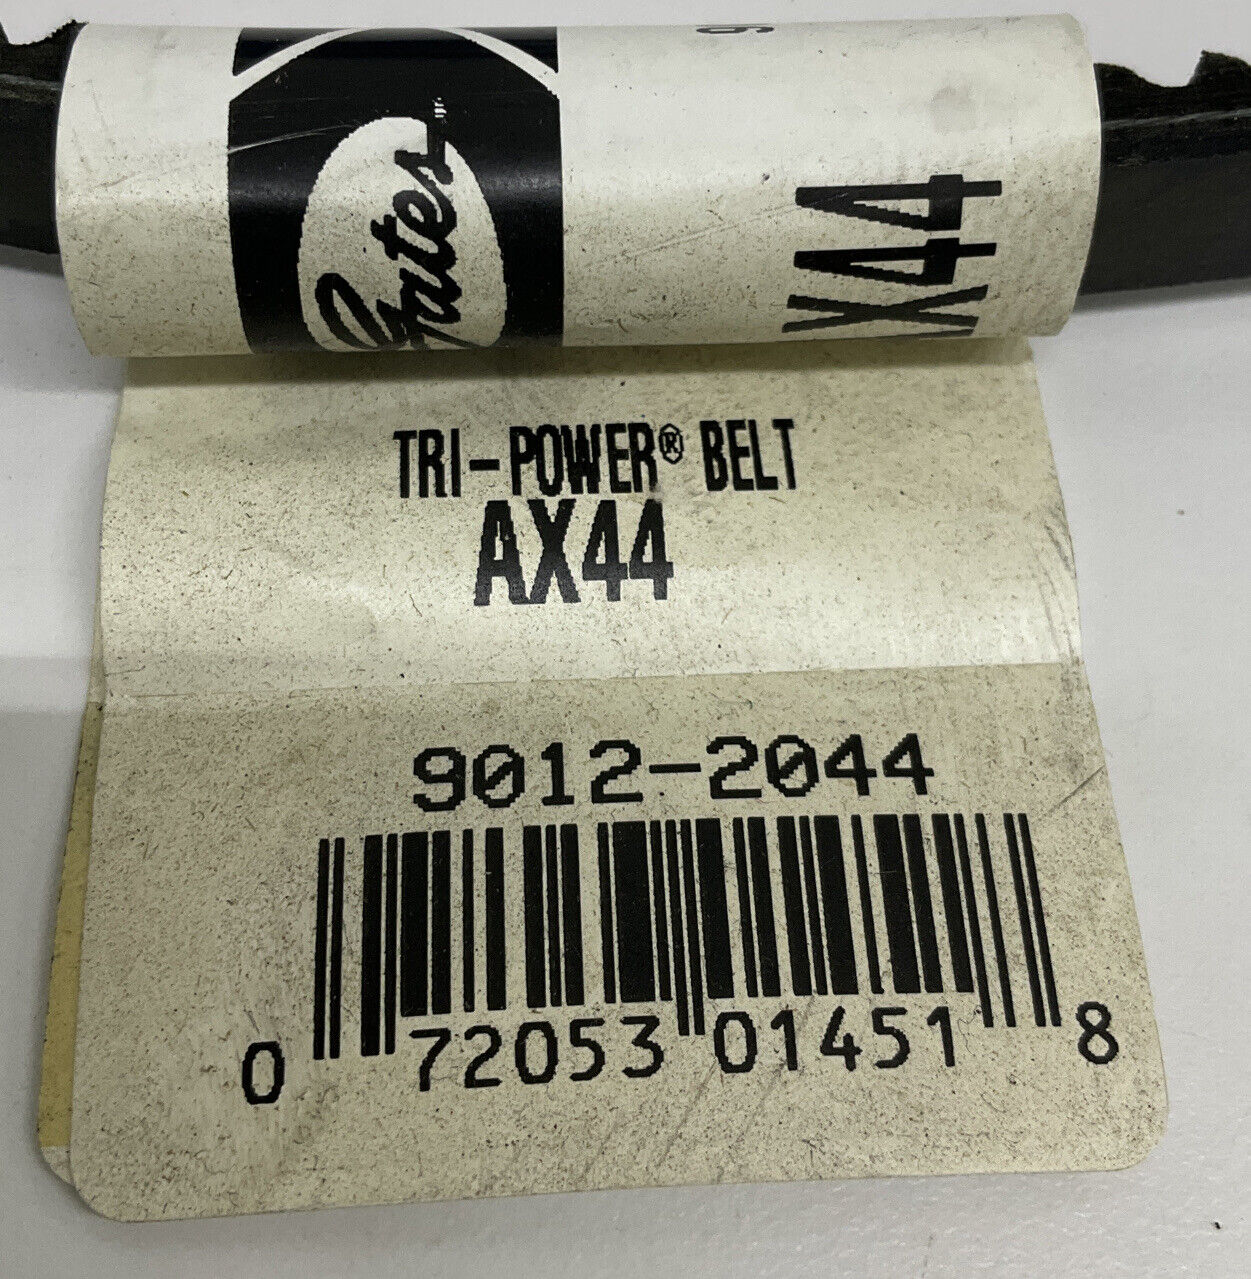 Gates AX 44 / 9012-2044 Tri-Power Belt Cogged V-Belt (BE121)